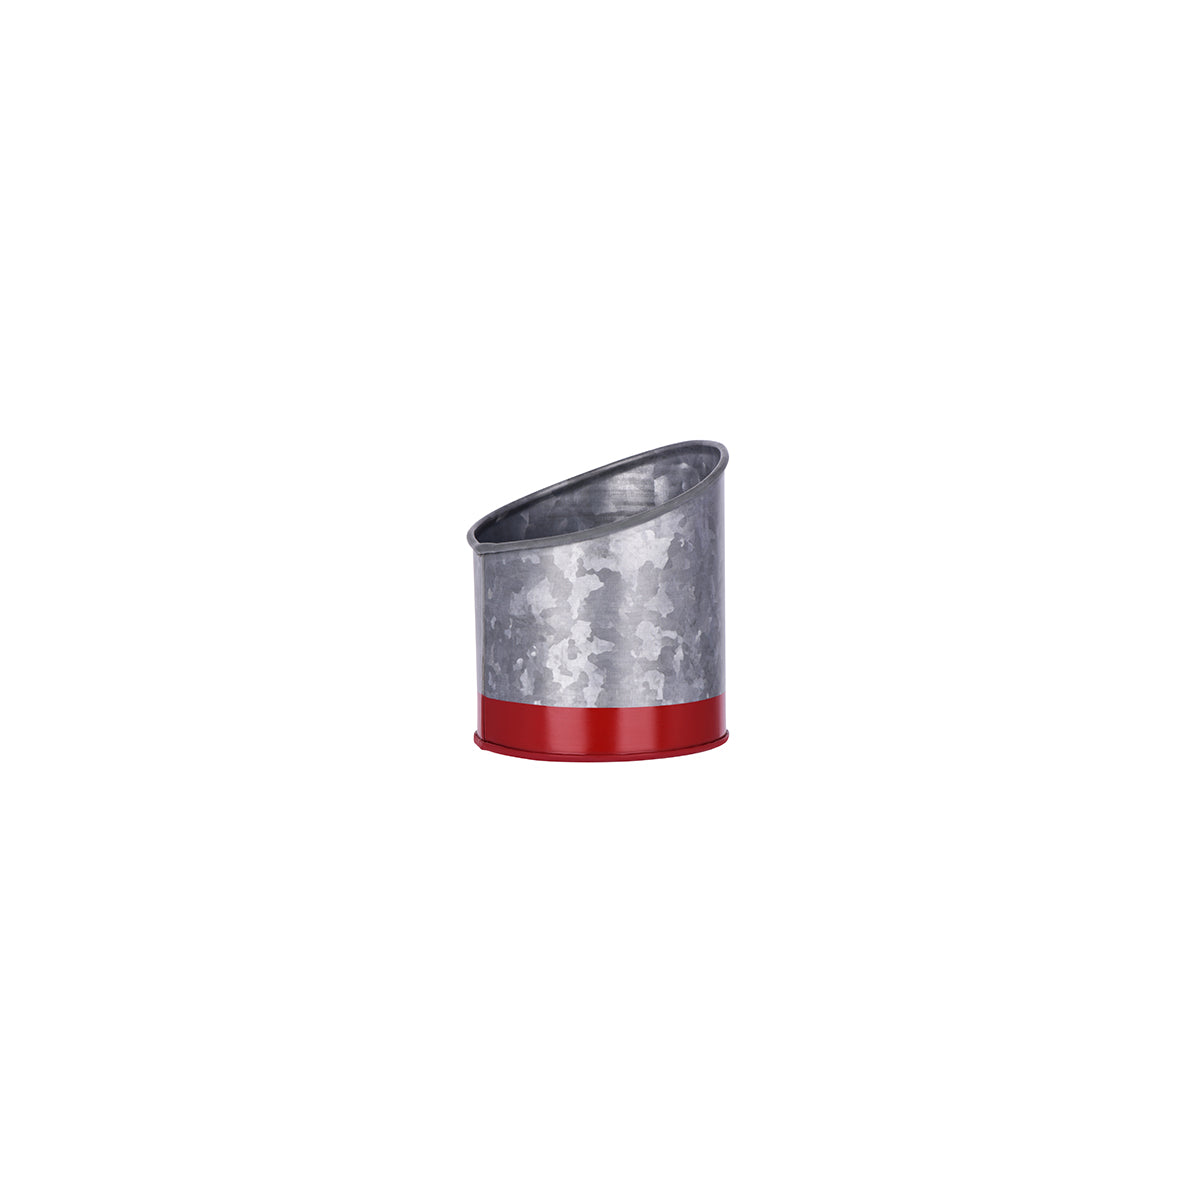 78620 Chef Inox Coney Island Slant Pot Galvanised with Red Base 105x115mm Tomkin Australia Hospitality Supplies